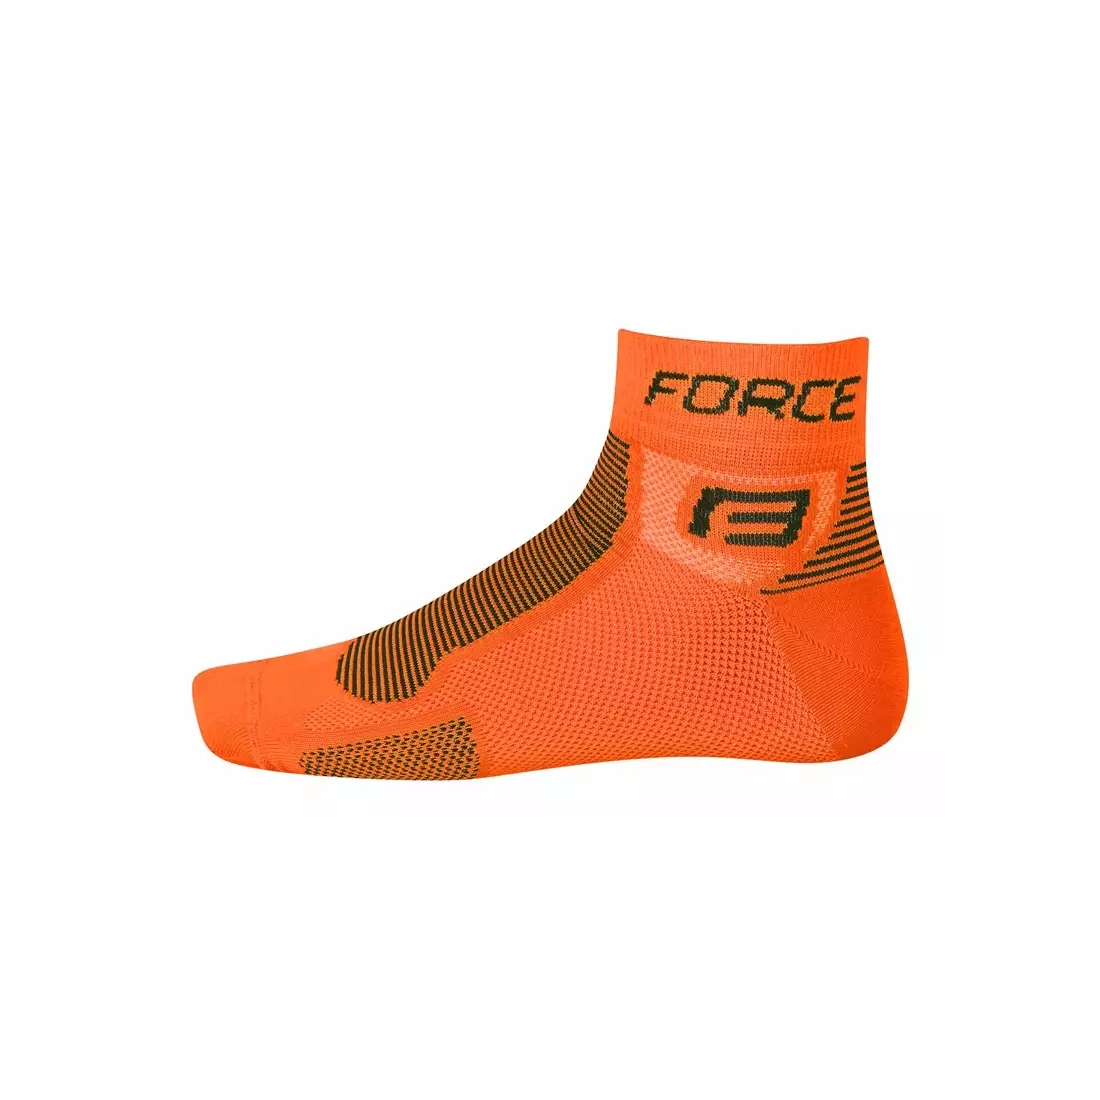 FORCE Socken 9010, Farbe: Orange